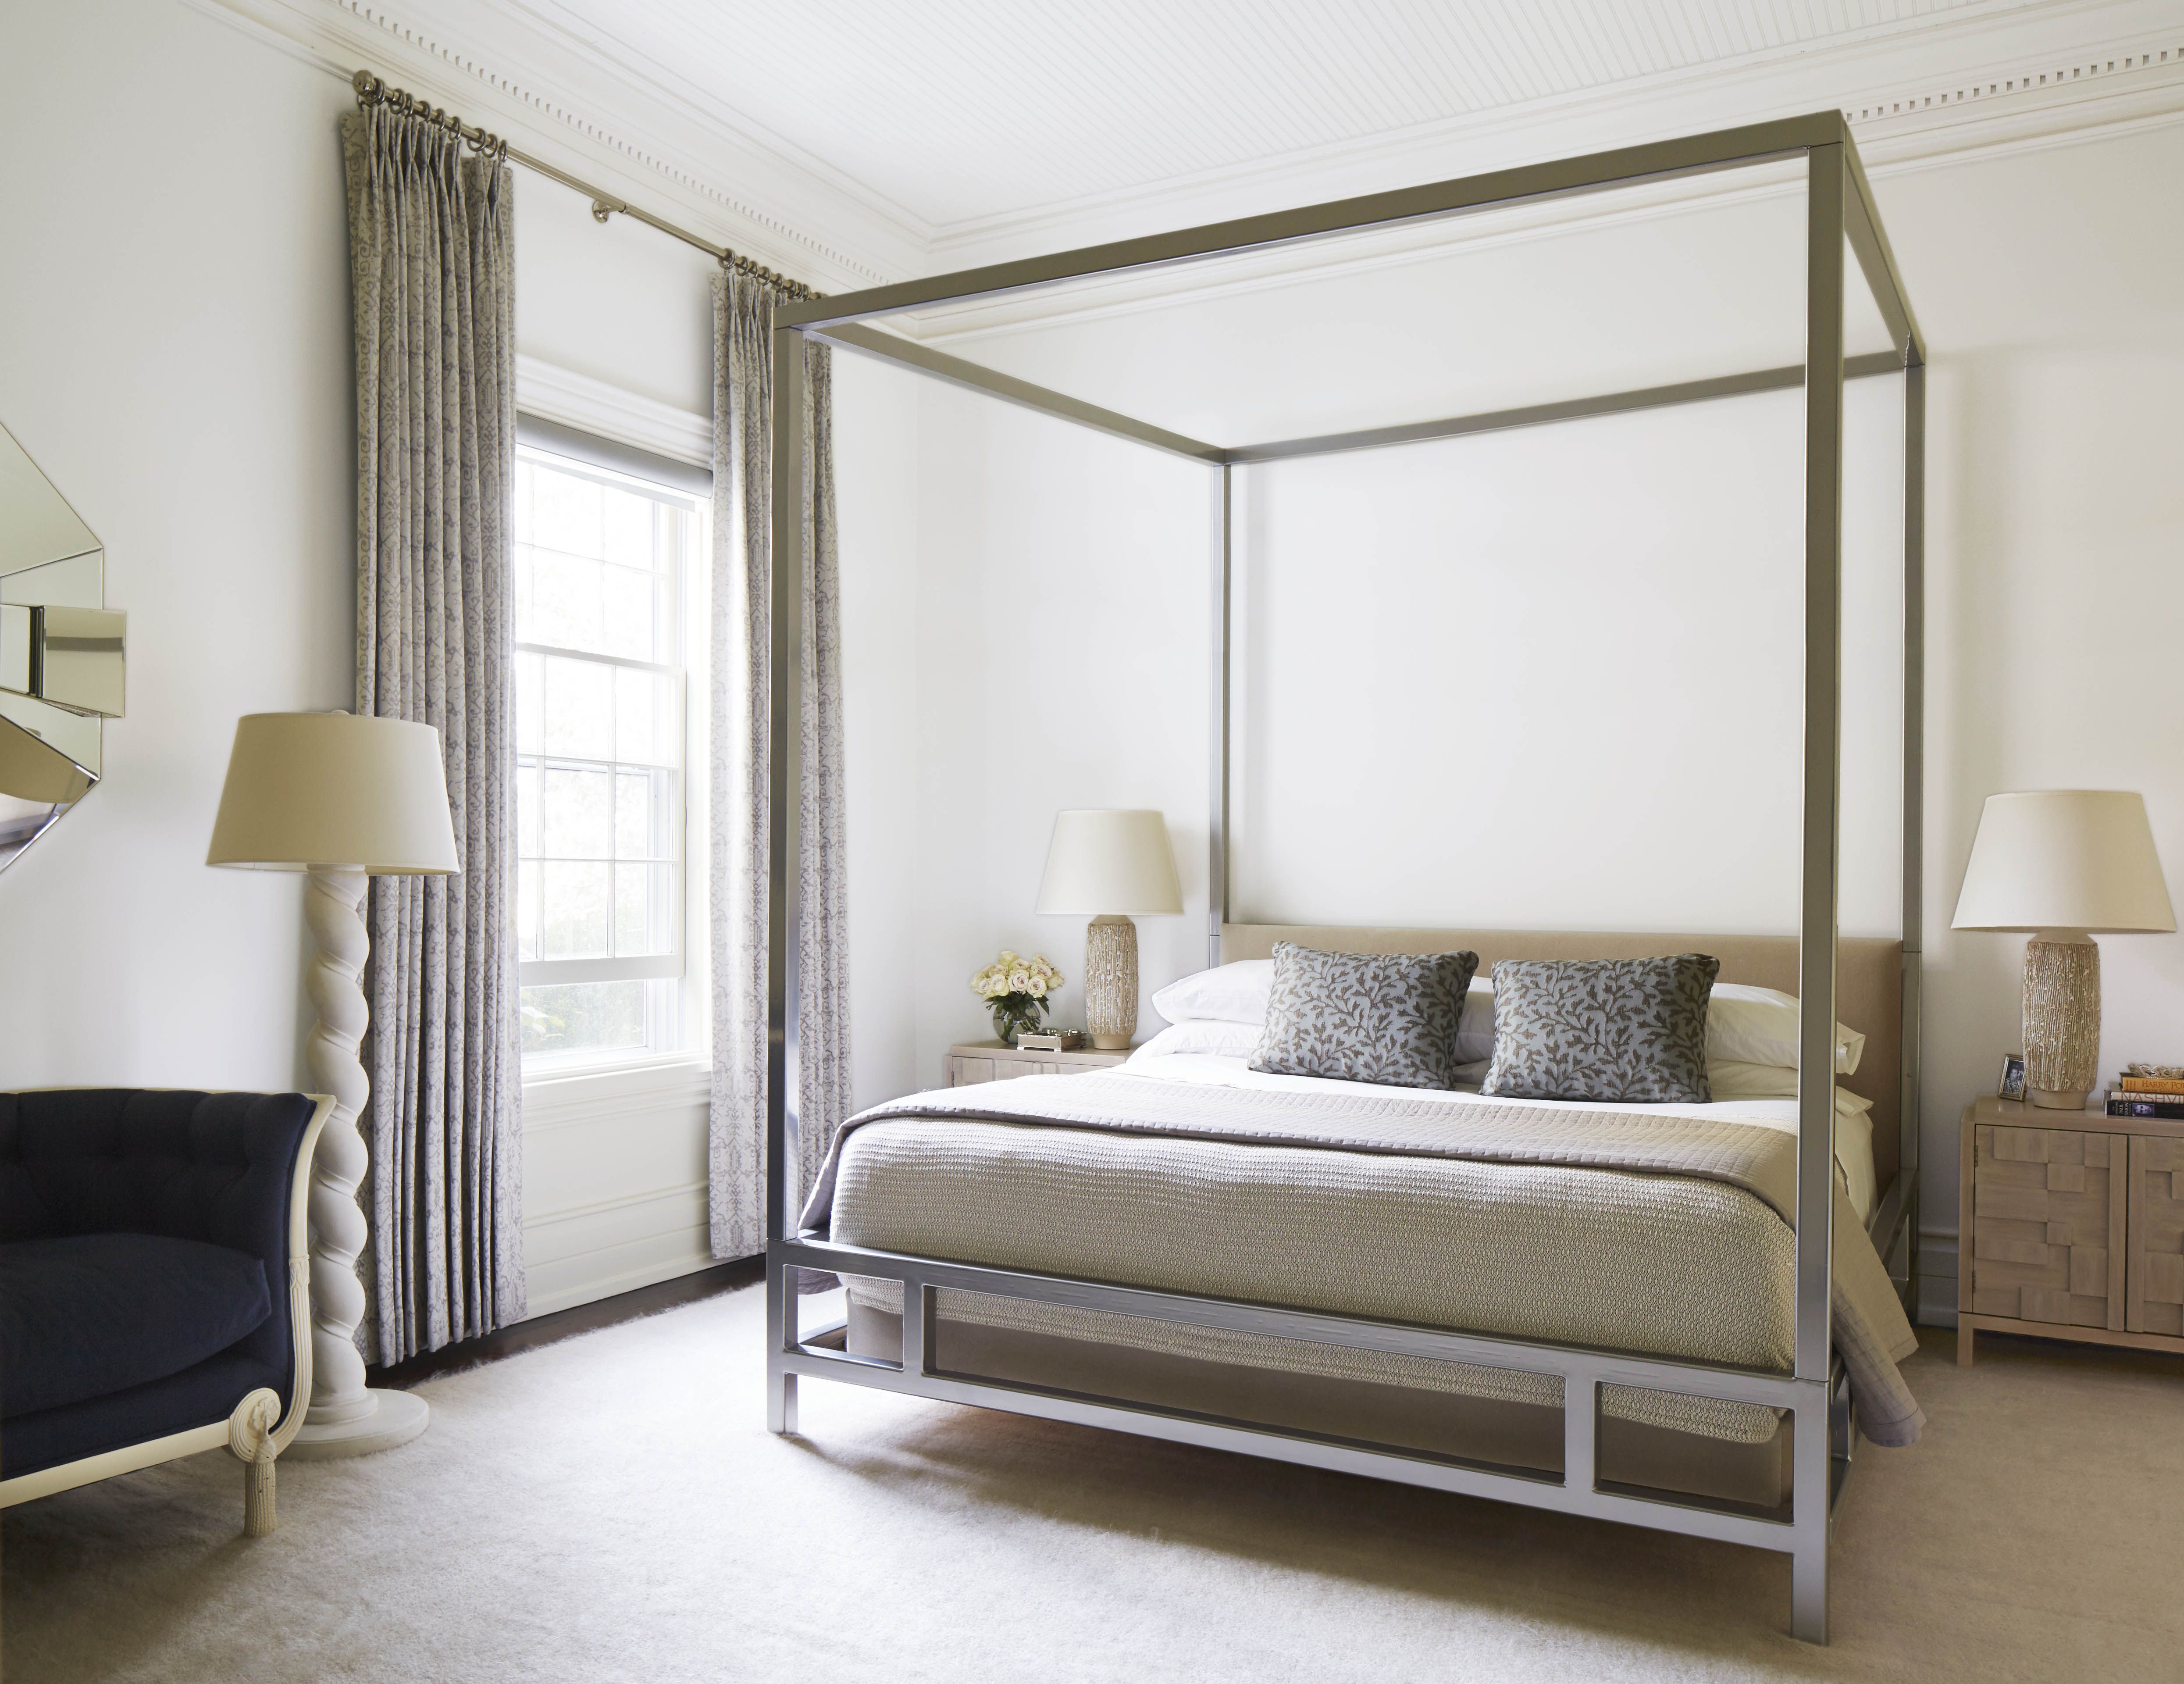 18 White Bedroom Ideas Luxury White Bedroom Designs And Decor